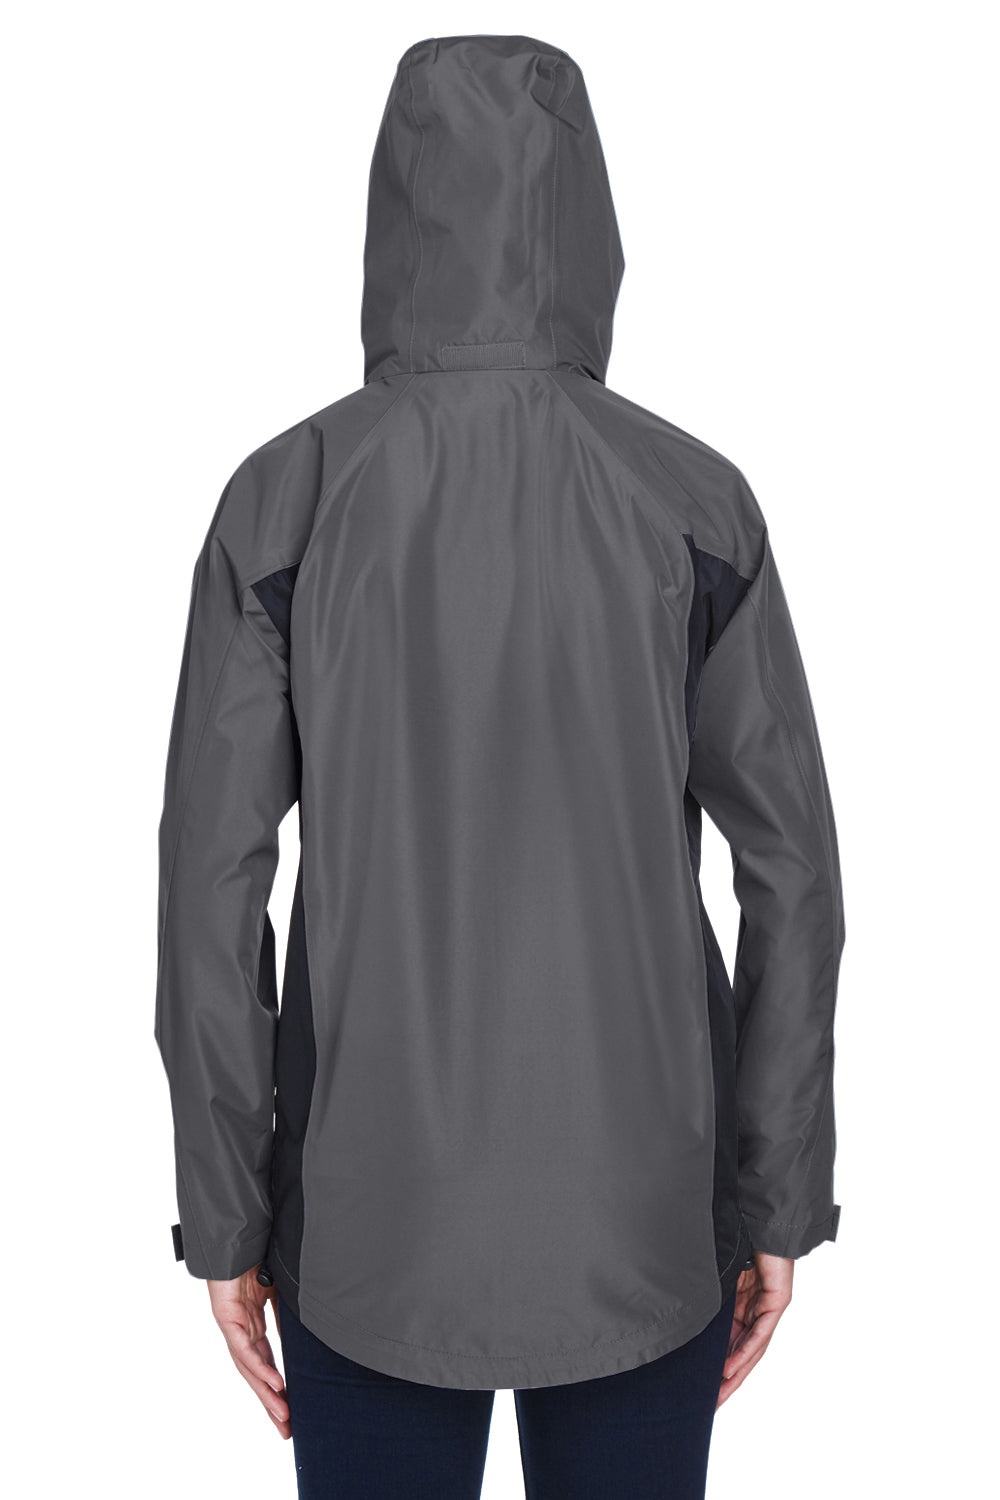 Team 365 TT86W Womens Dominator Waterproof Full Zip Hooded Jacket Graphite Grey Back